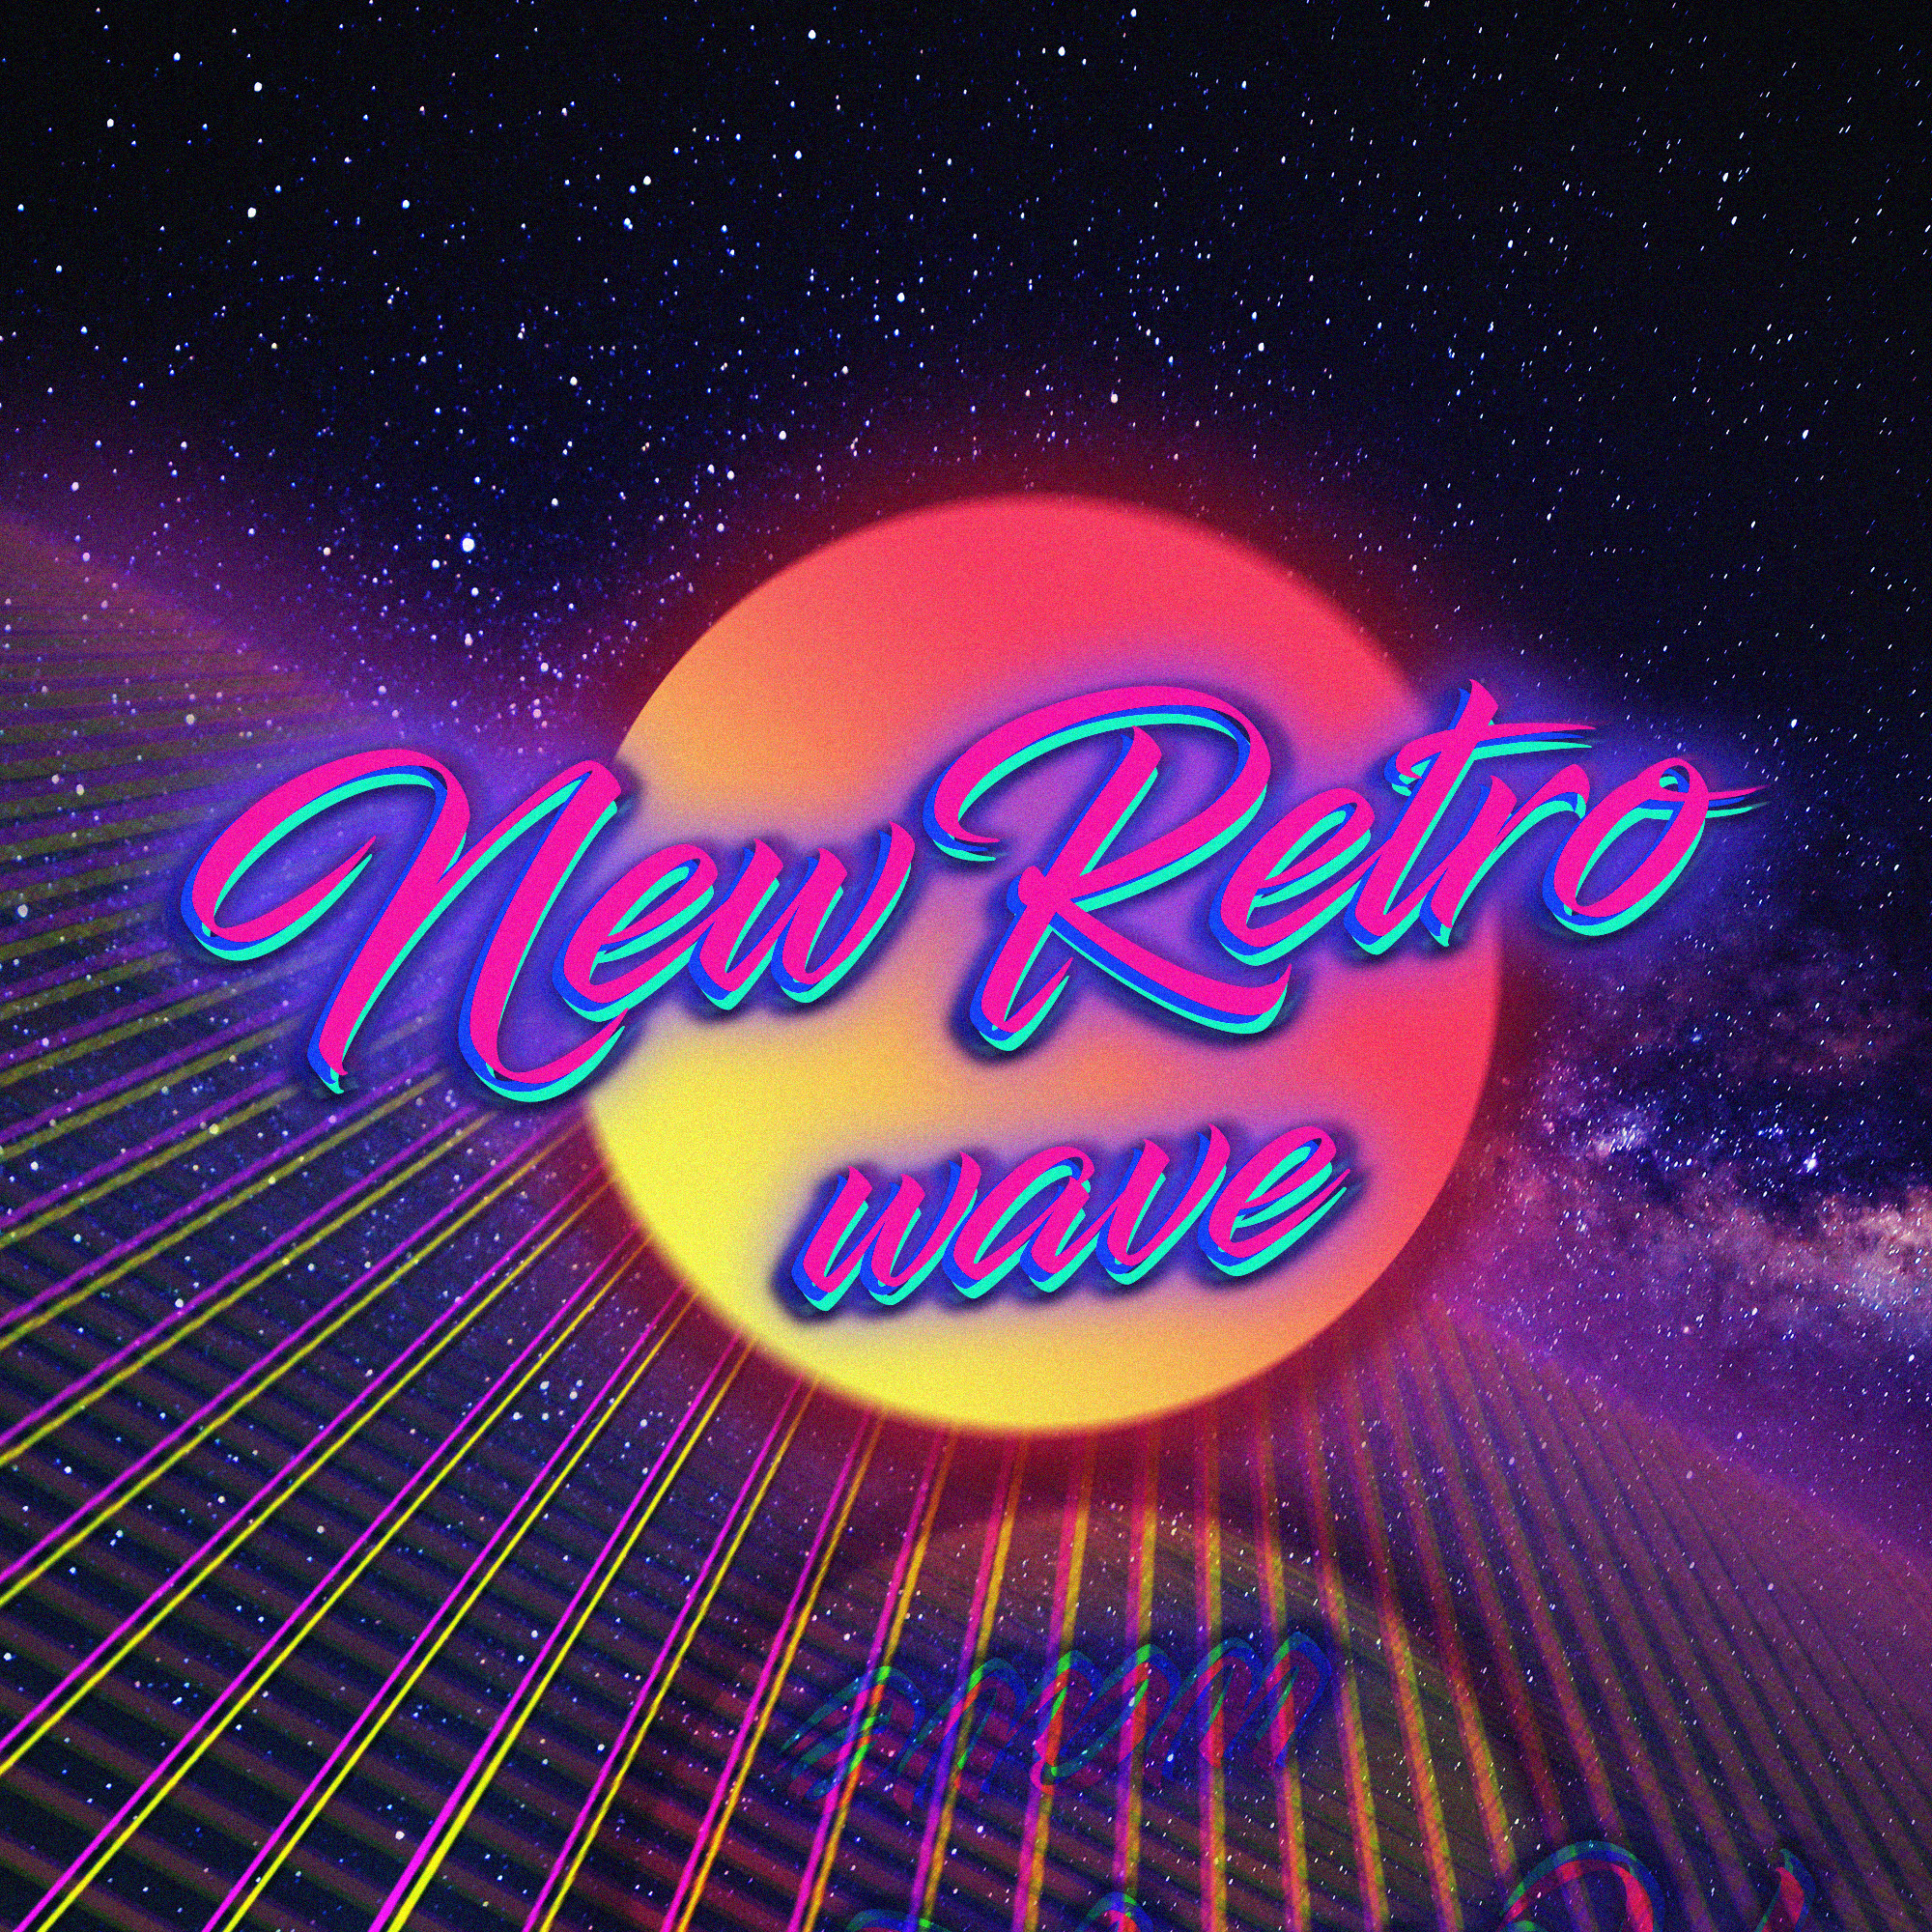 Retro style, New Retro Wave, 1980s, Digital art, Neon, Vintage, Space, Typography Wallpaper